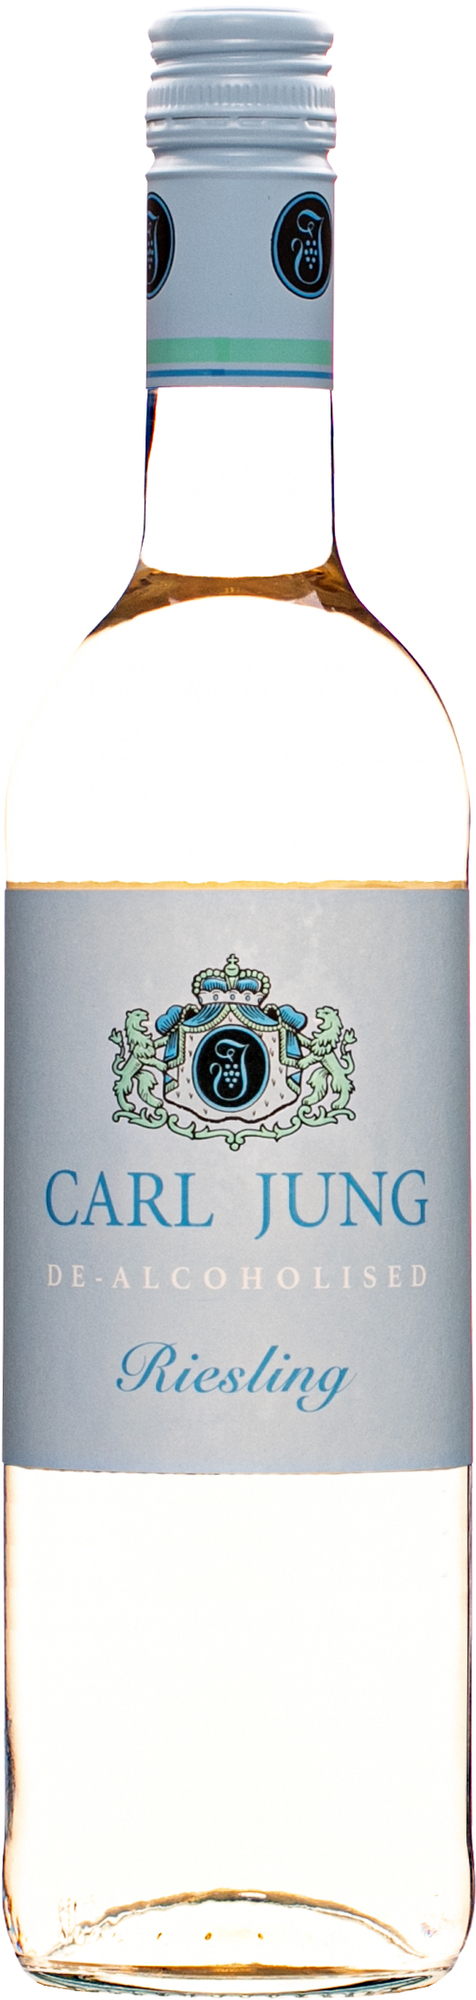 Carl Jung Riesling - Non-alcoholic wine | Bondston